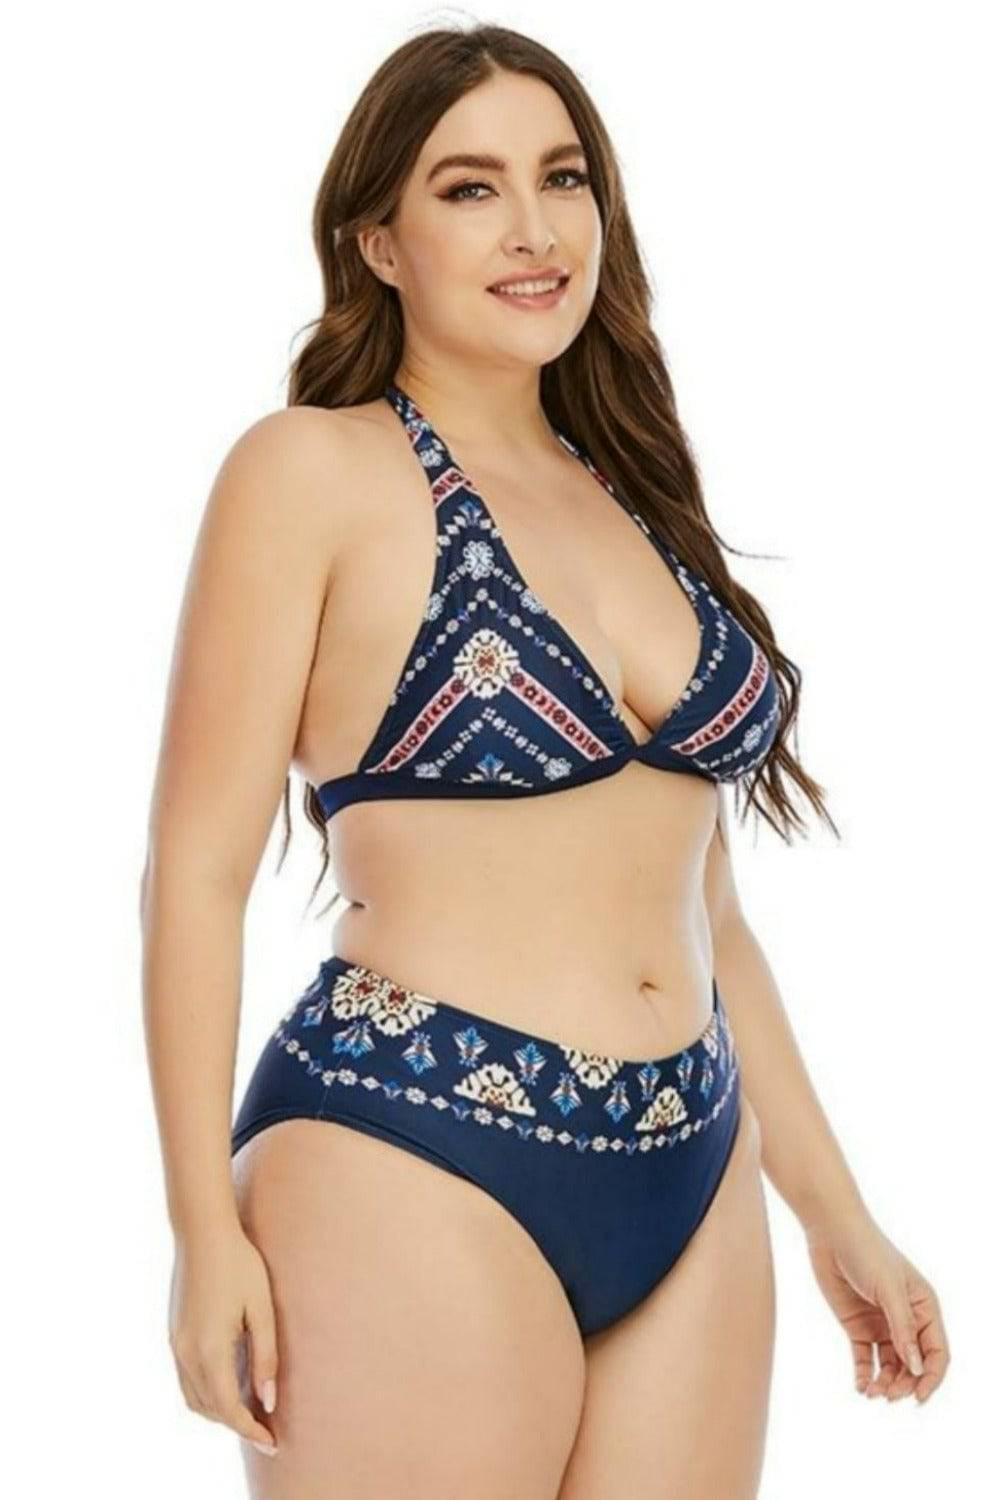 Tamara Blue Two-Piece Plus size Bikini Swimsuit - TGC Boutique - Plus Size Swimsuit